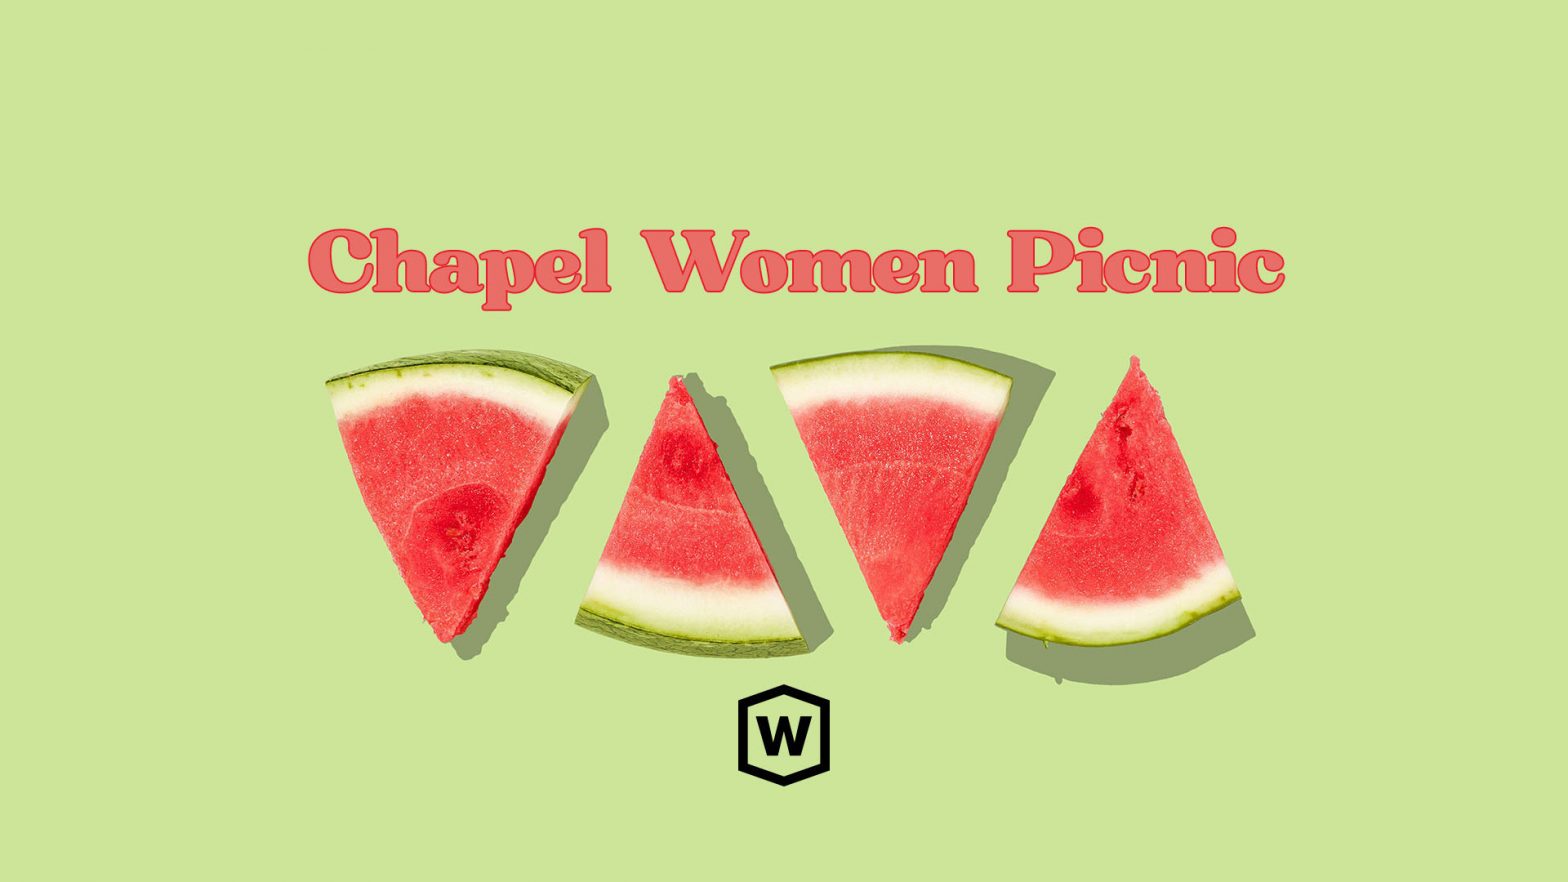 Chapel Women Picnic event image